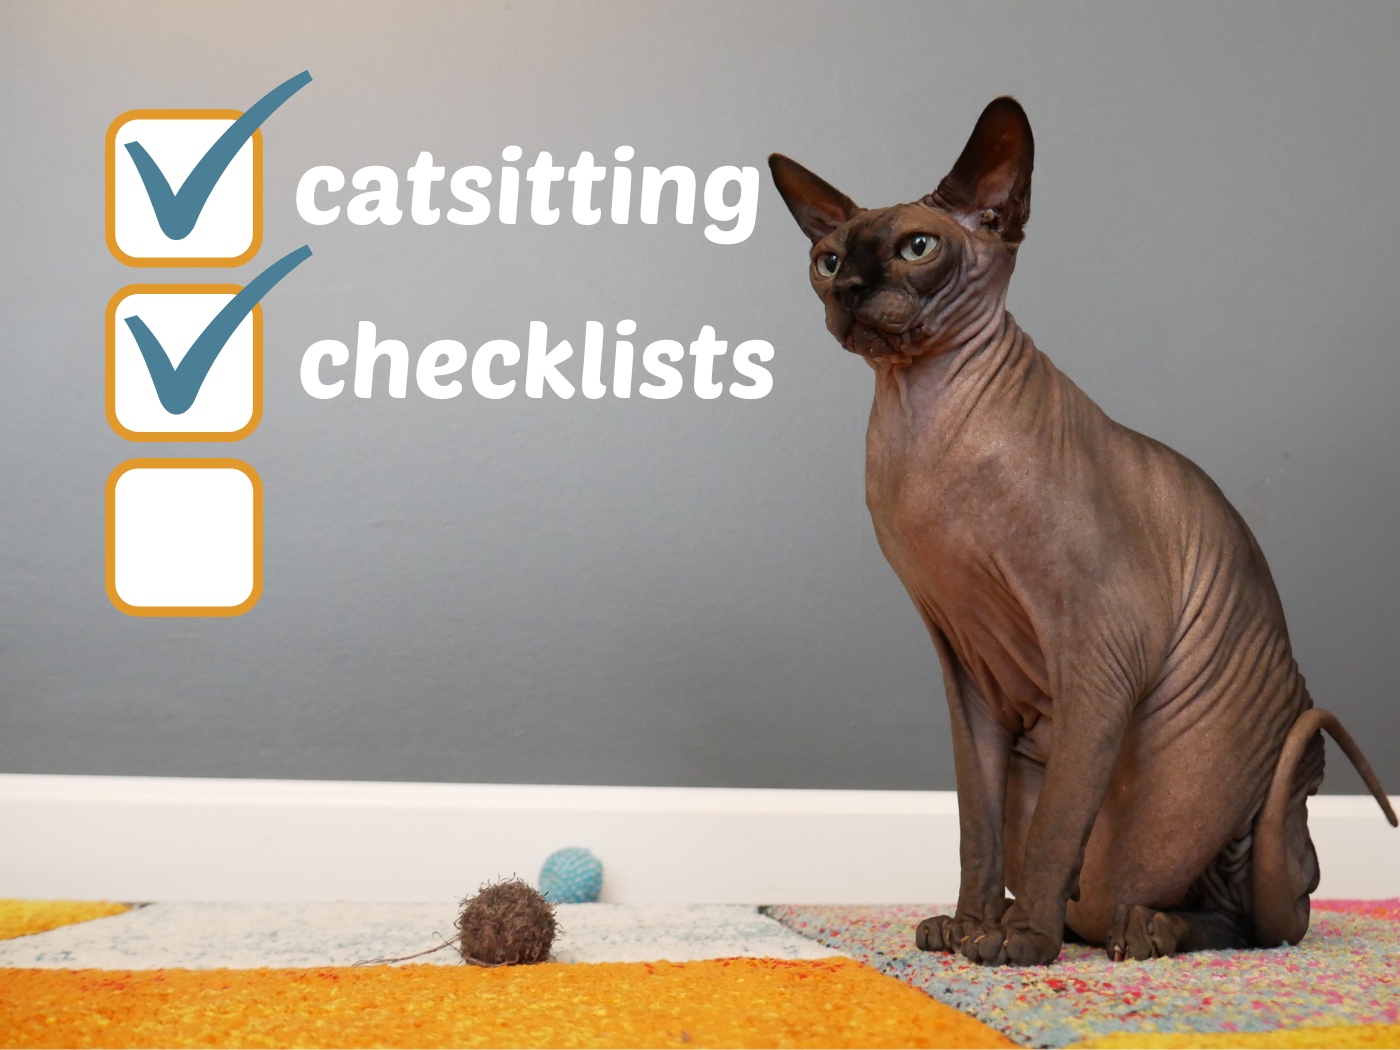 housesitting checklists catsitting abroad travel cat kitten